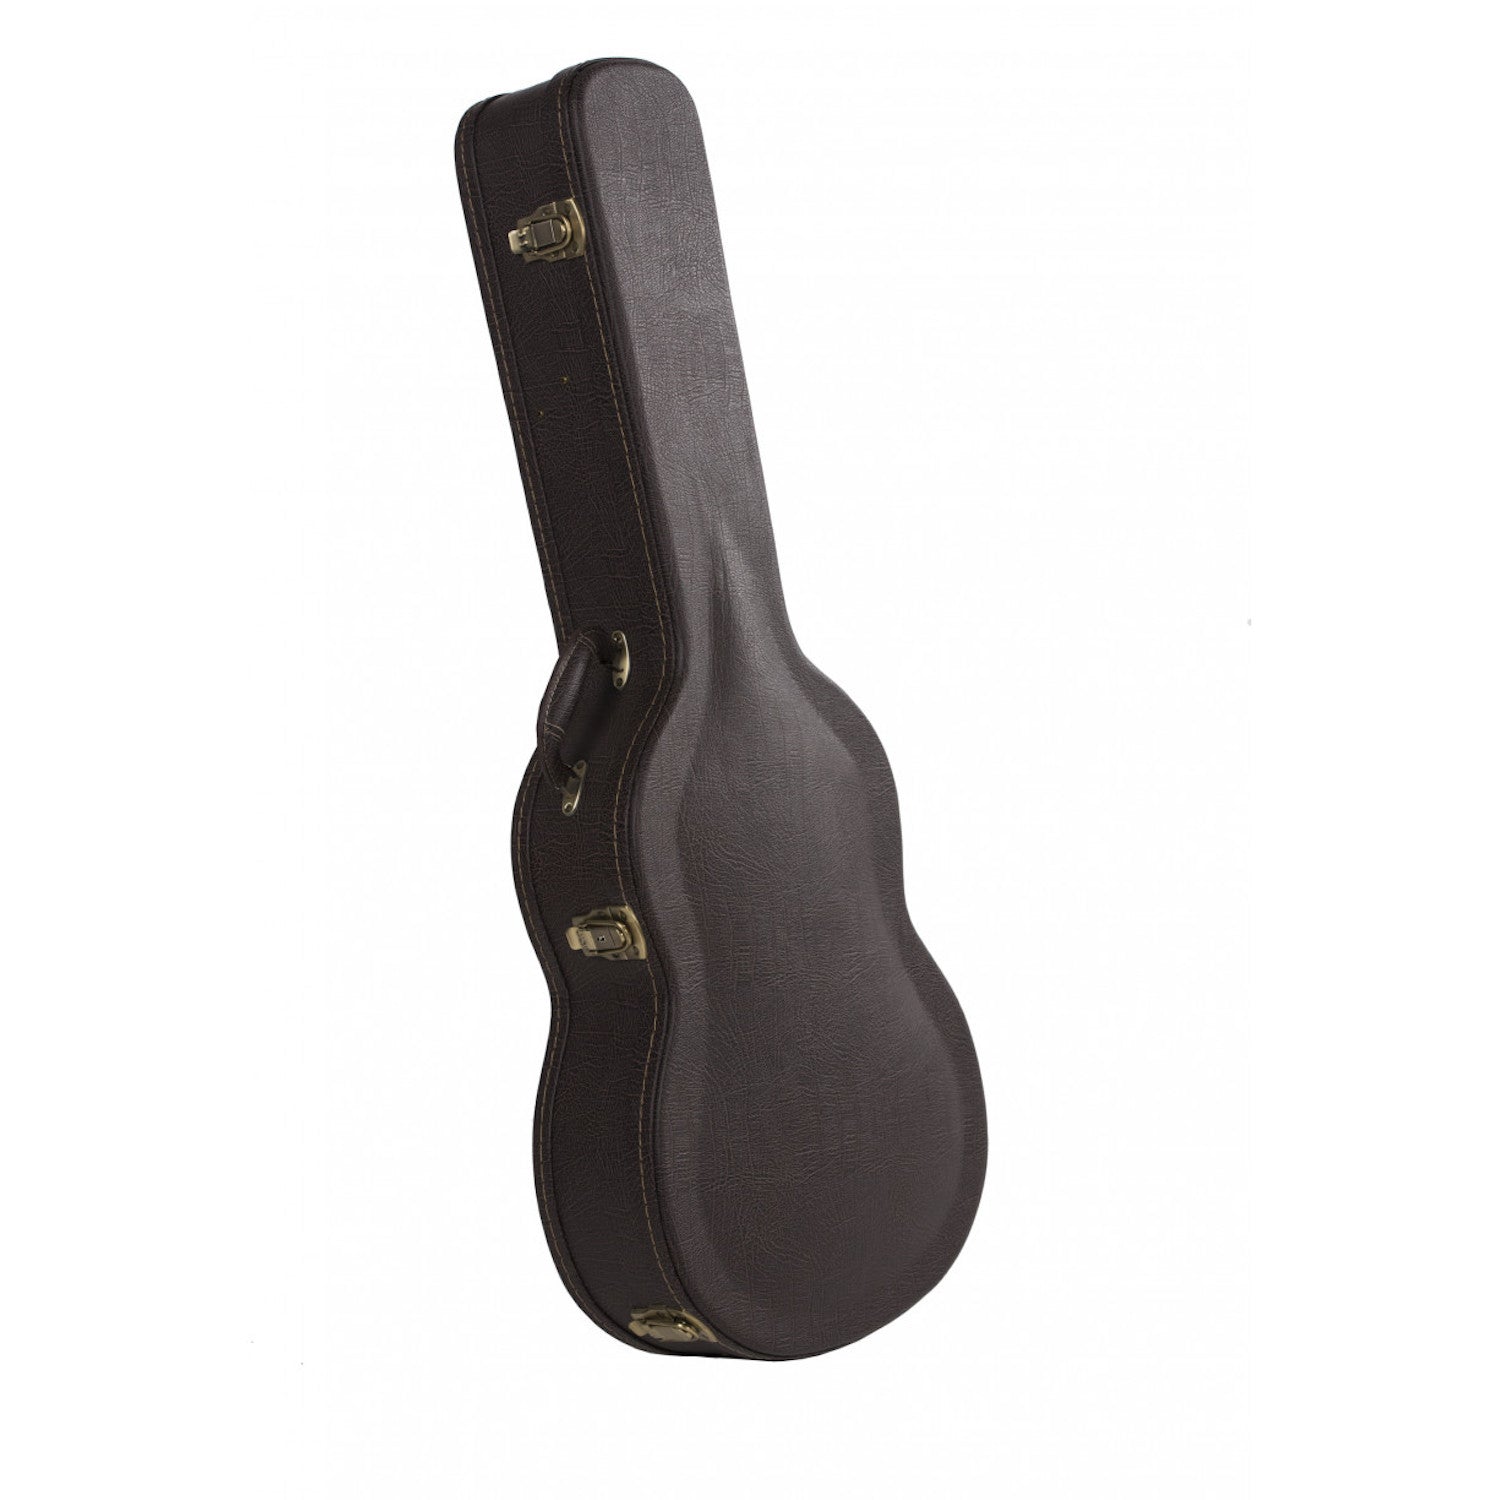 Katoh MCG128C Classical Guitar Solid Cedar/Solid Rosewood